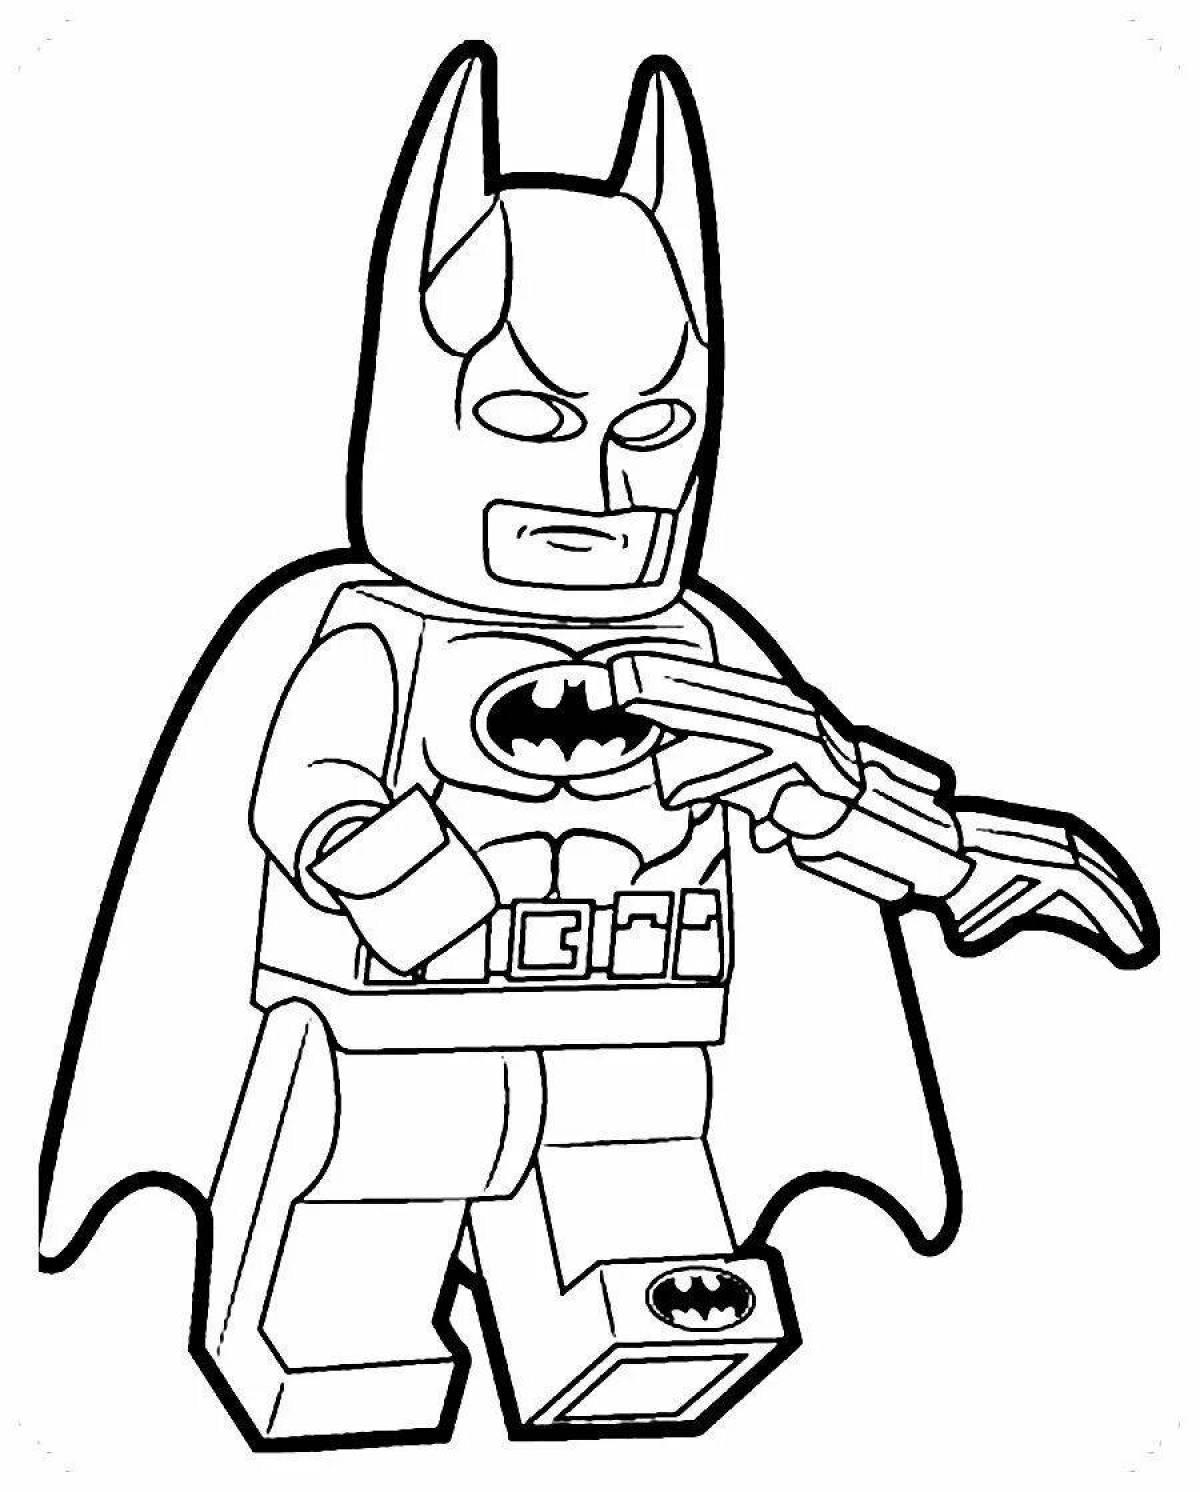 Outstanding batman coloring book